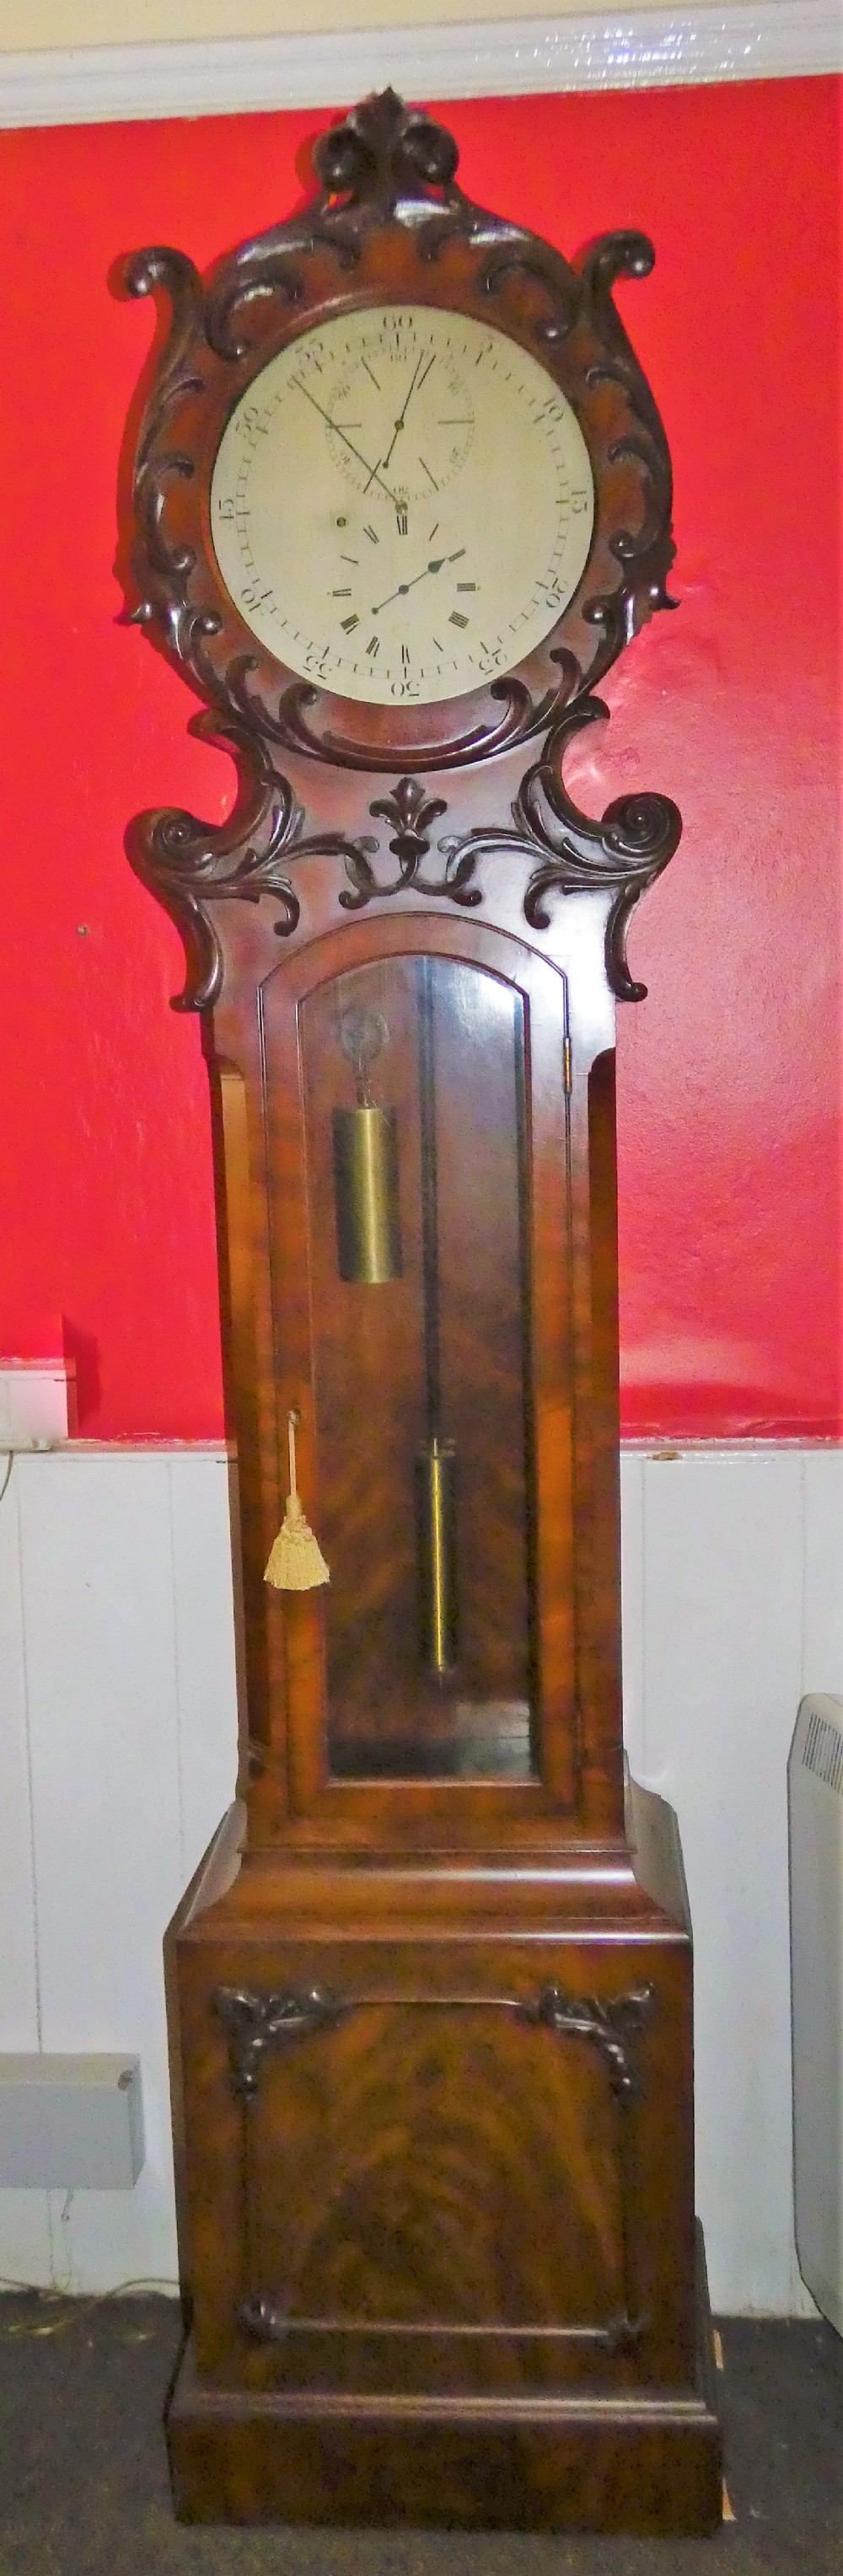 regulator longcase clock